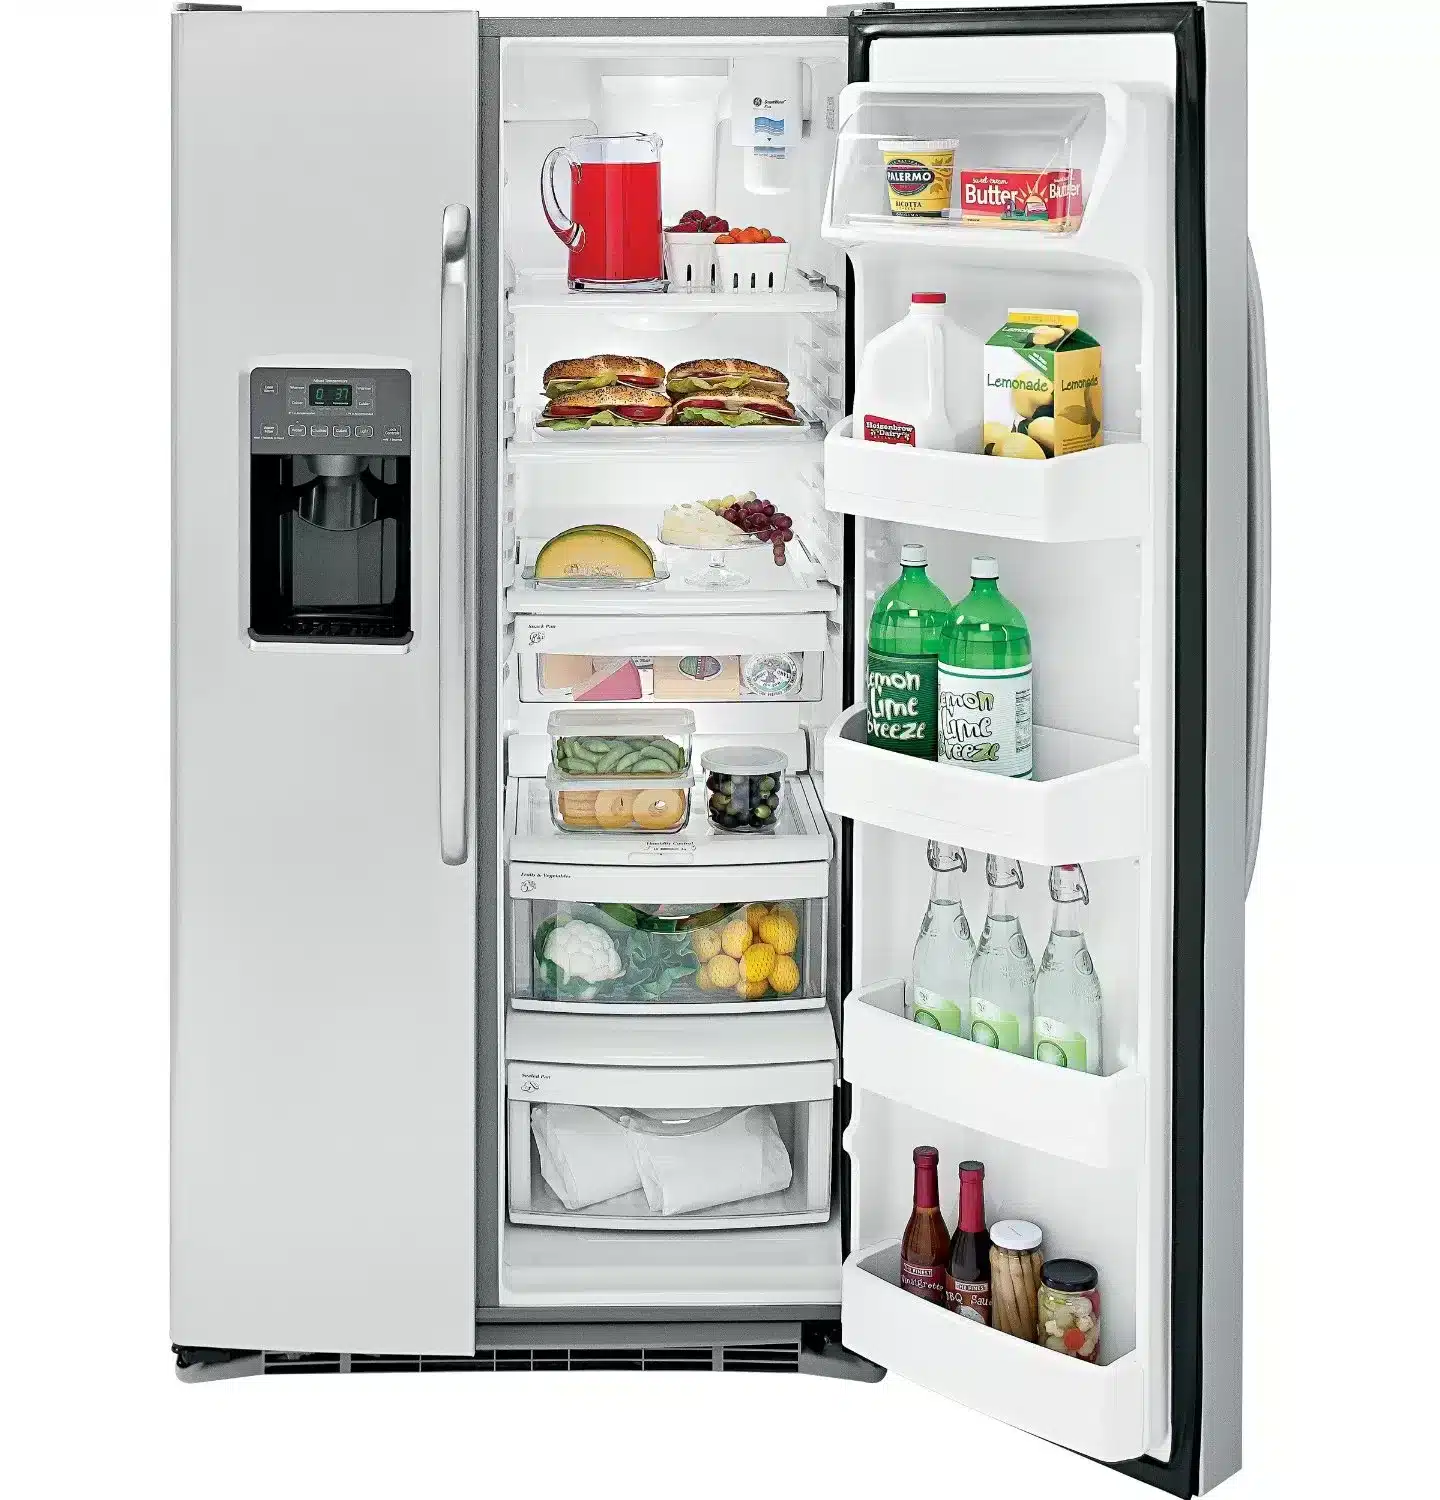 how-to-reset-a-ge-refrigerator